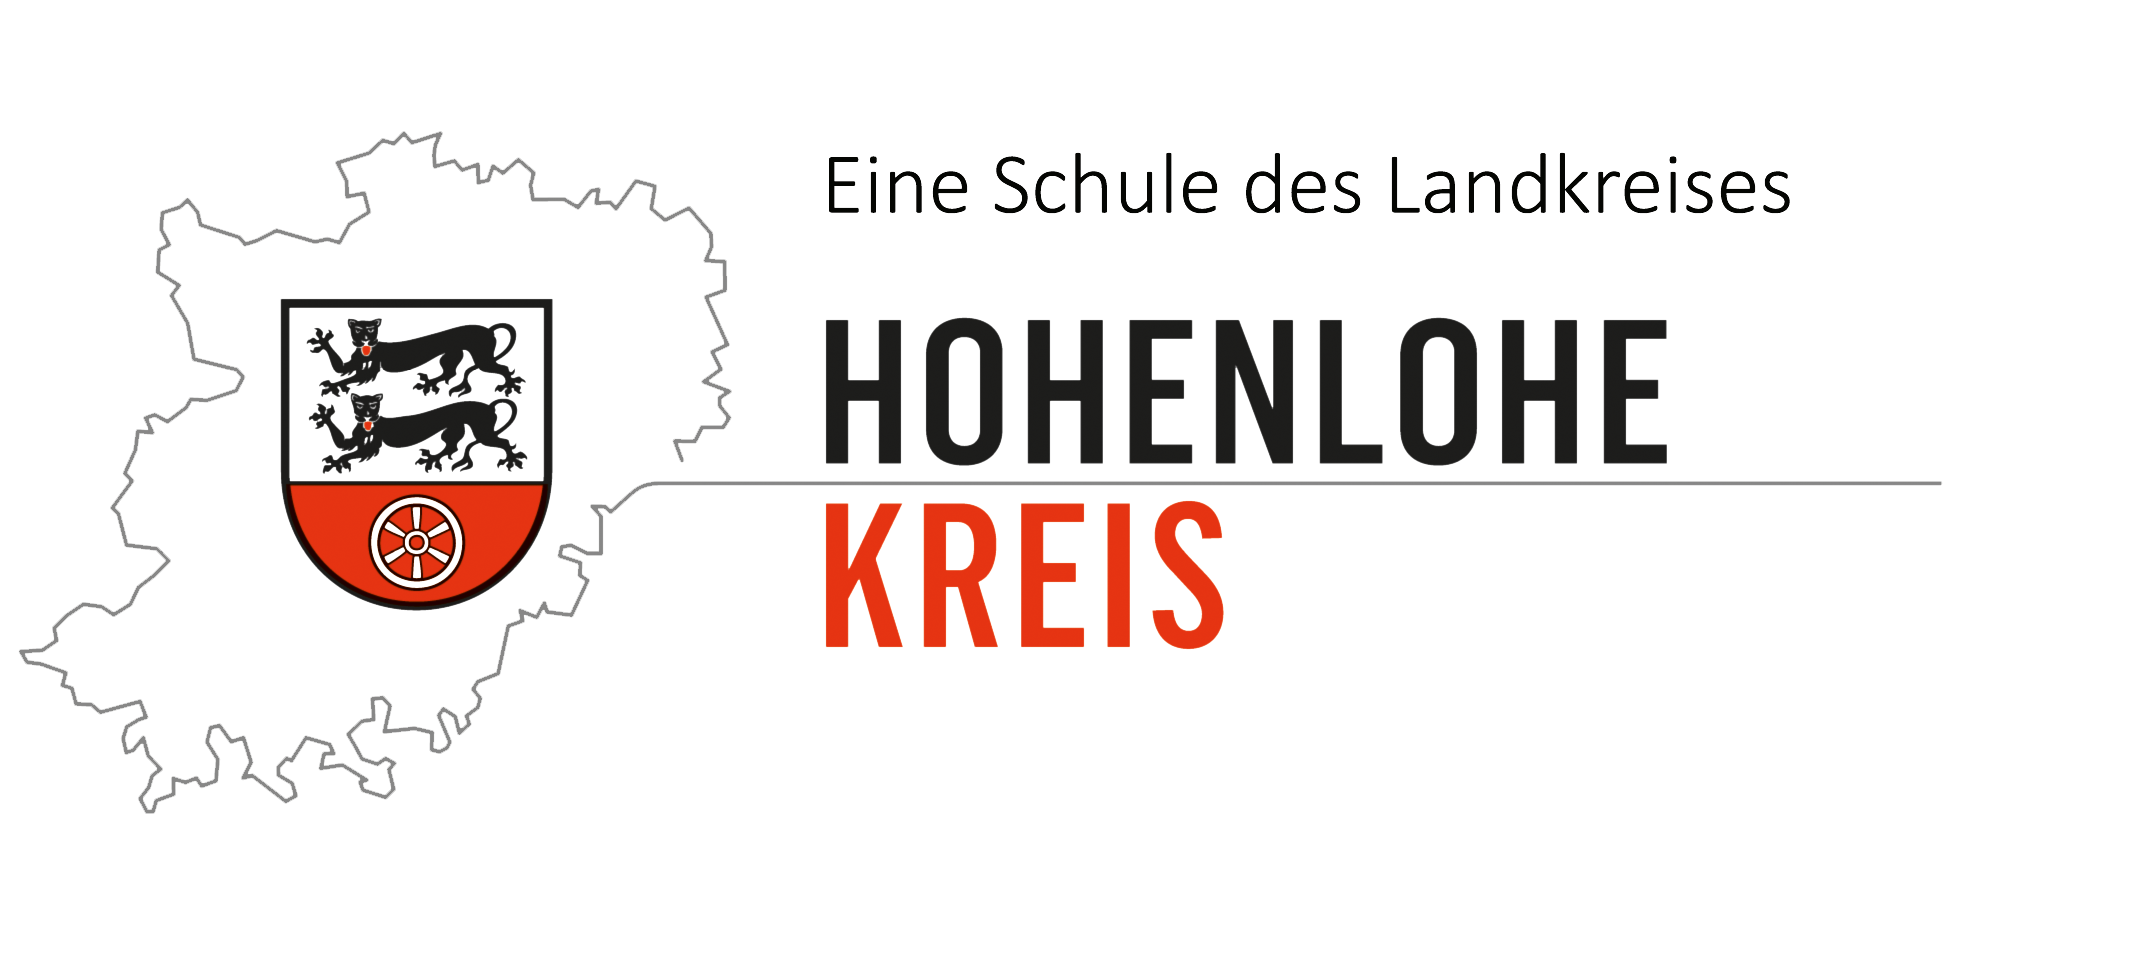 Hoenlohe kreis logo